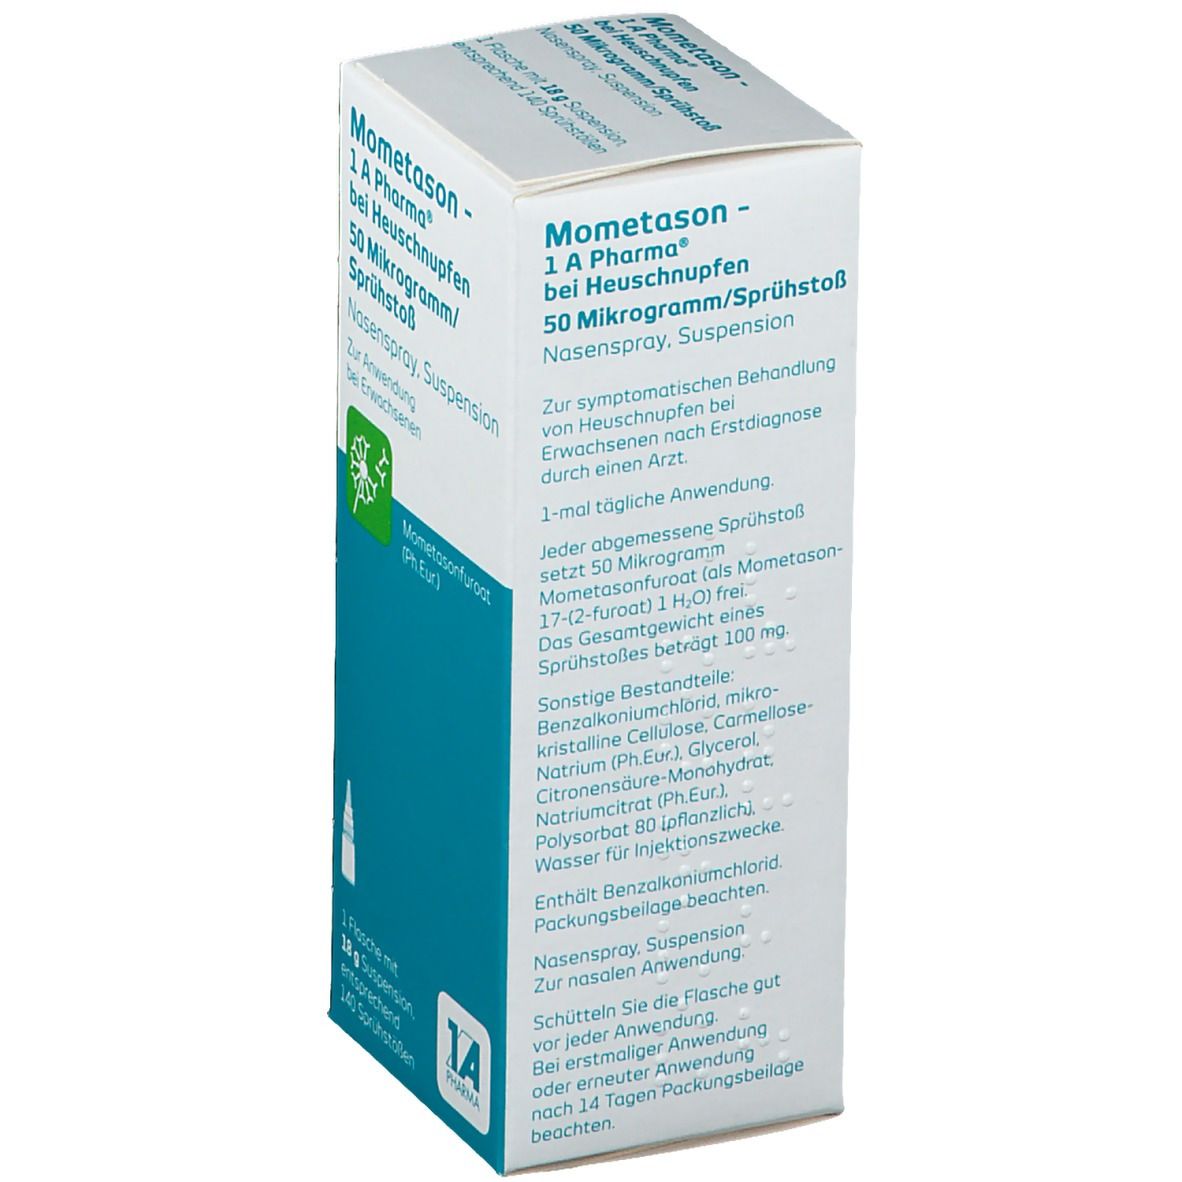 Mometason 1 A Pharma® bei Heuschnupfen